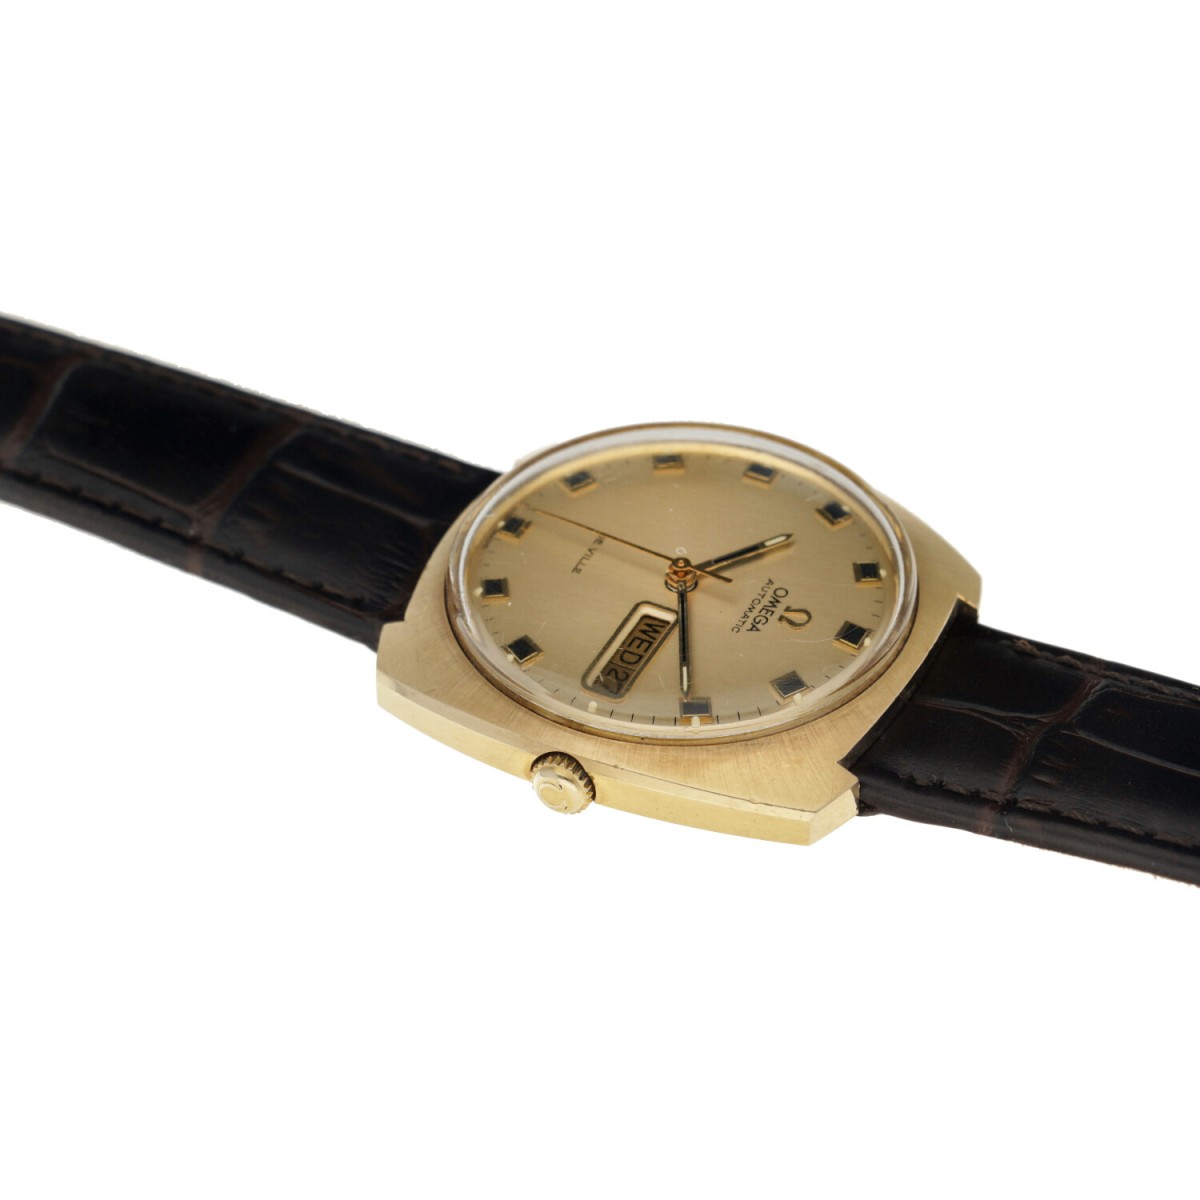 Omega De Ville - Men's watch - approx. 1970. - Image 4 of 6